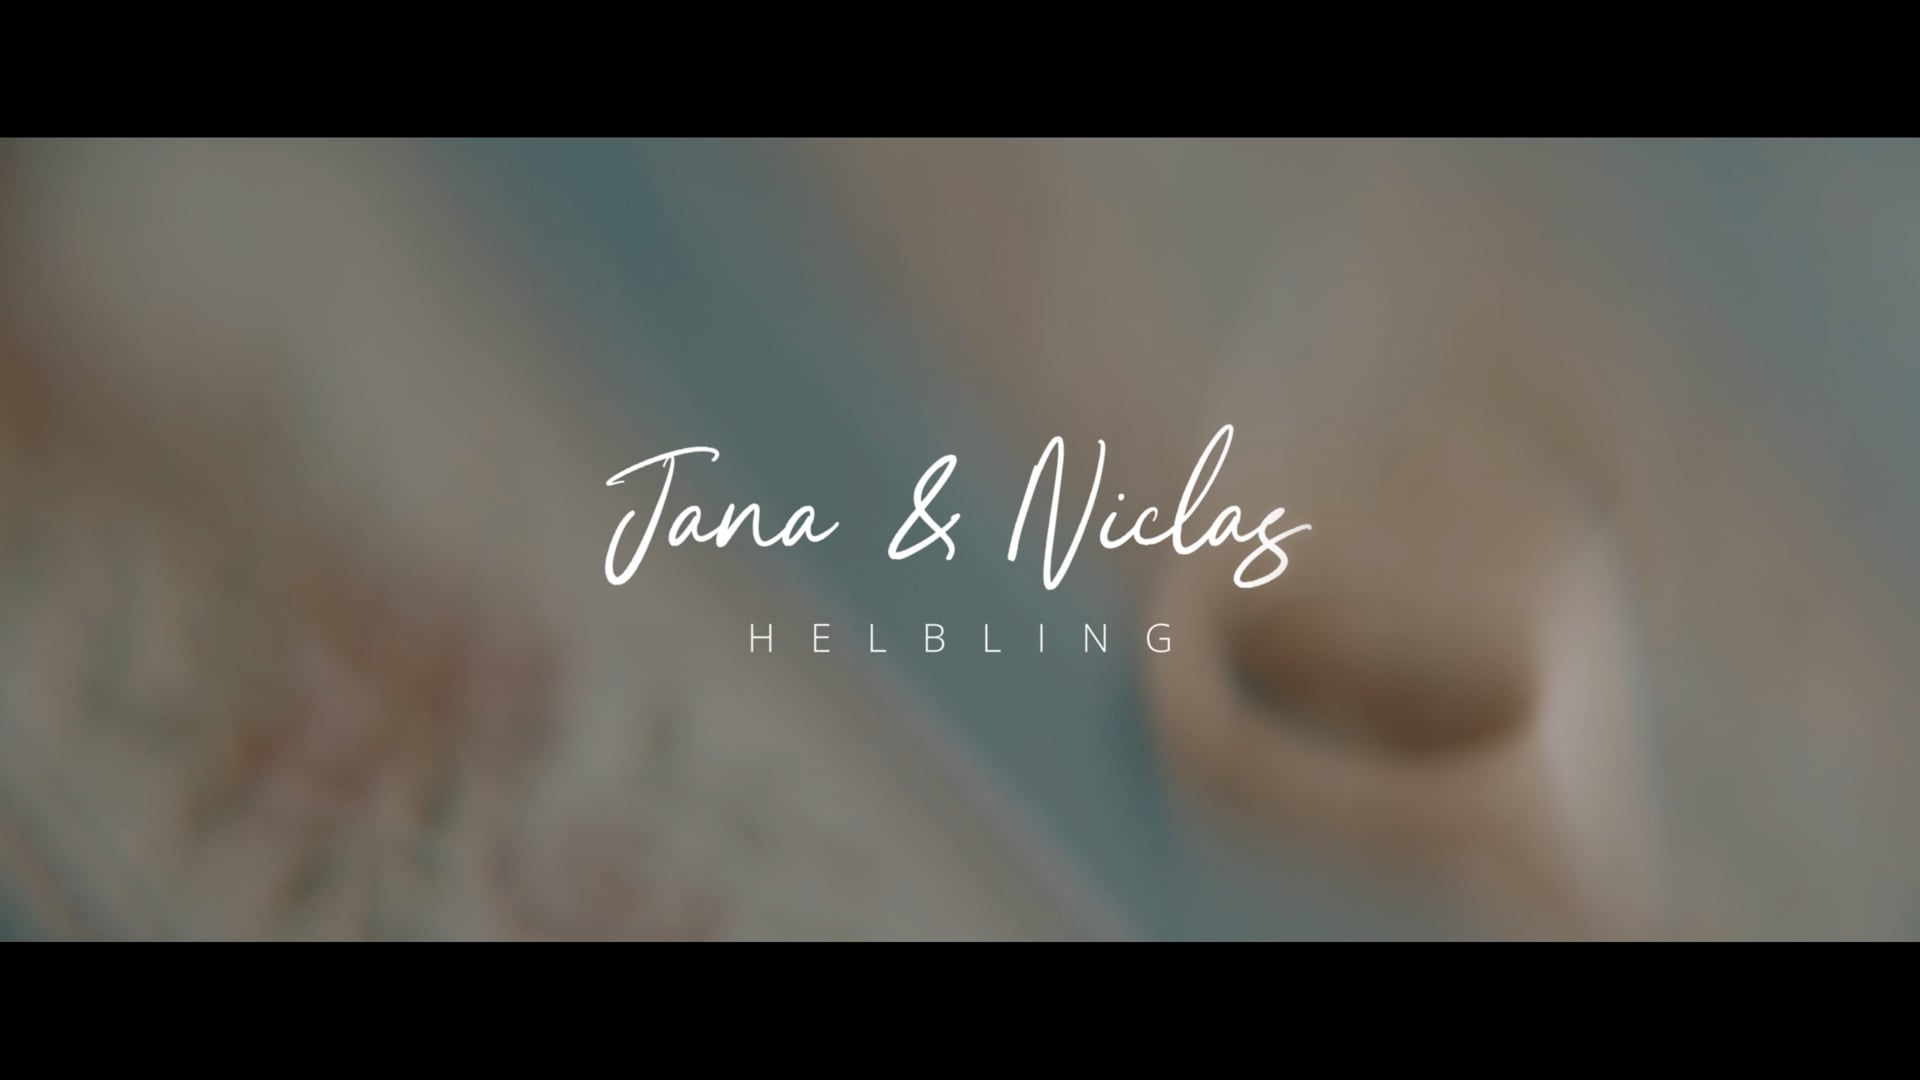 2021 - The Wedding of Jana & Niclas